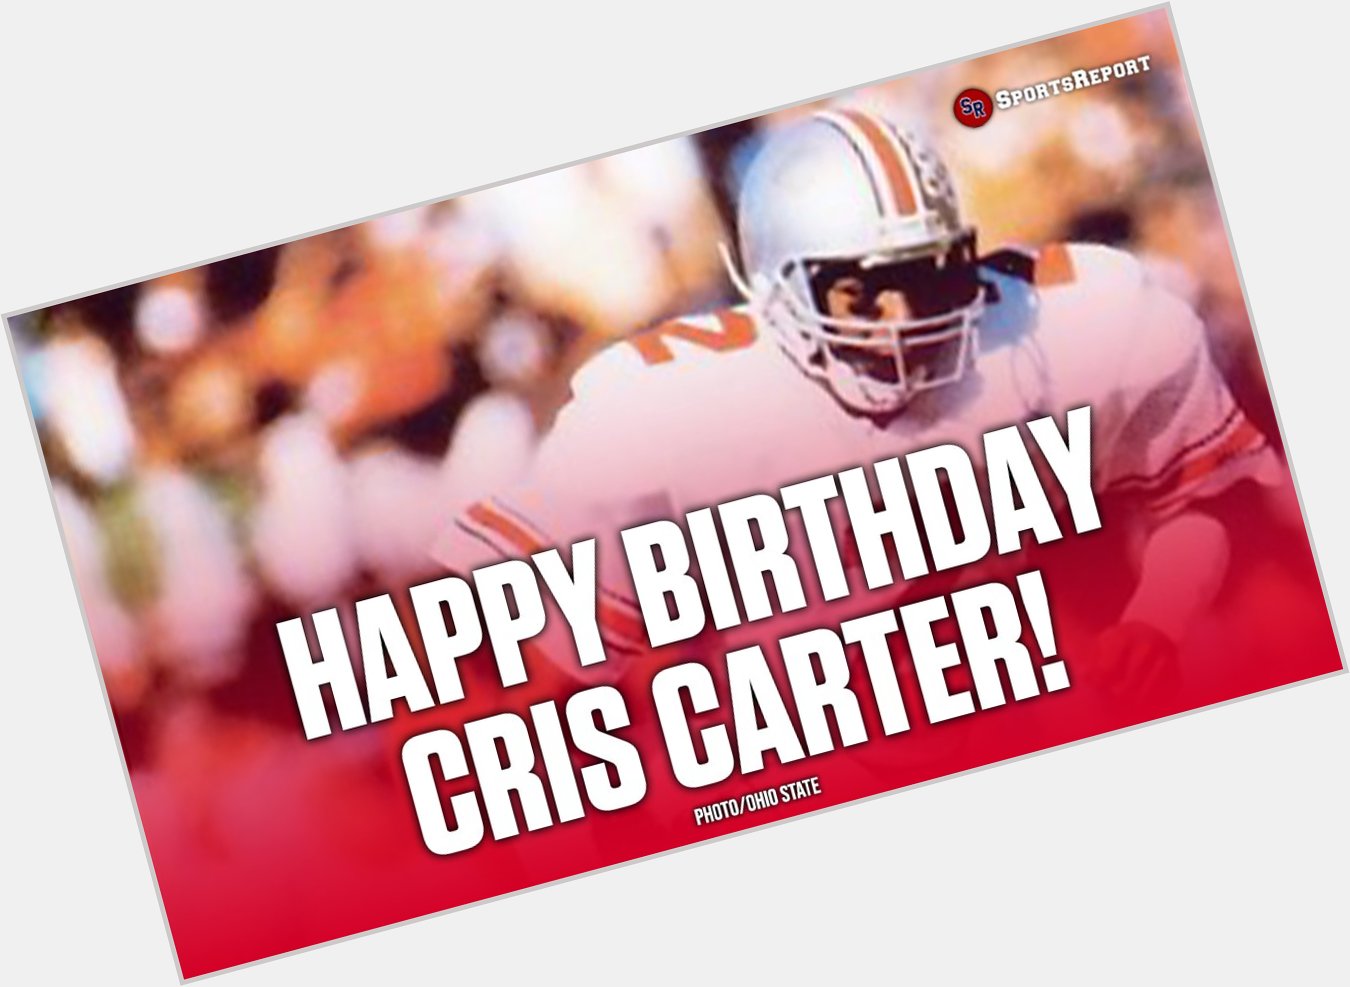  Fans, let\s wish legend Cris Carter a Happy Birthday! GO 